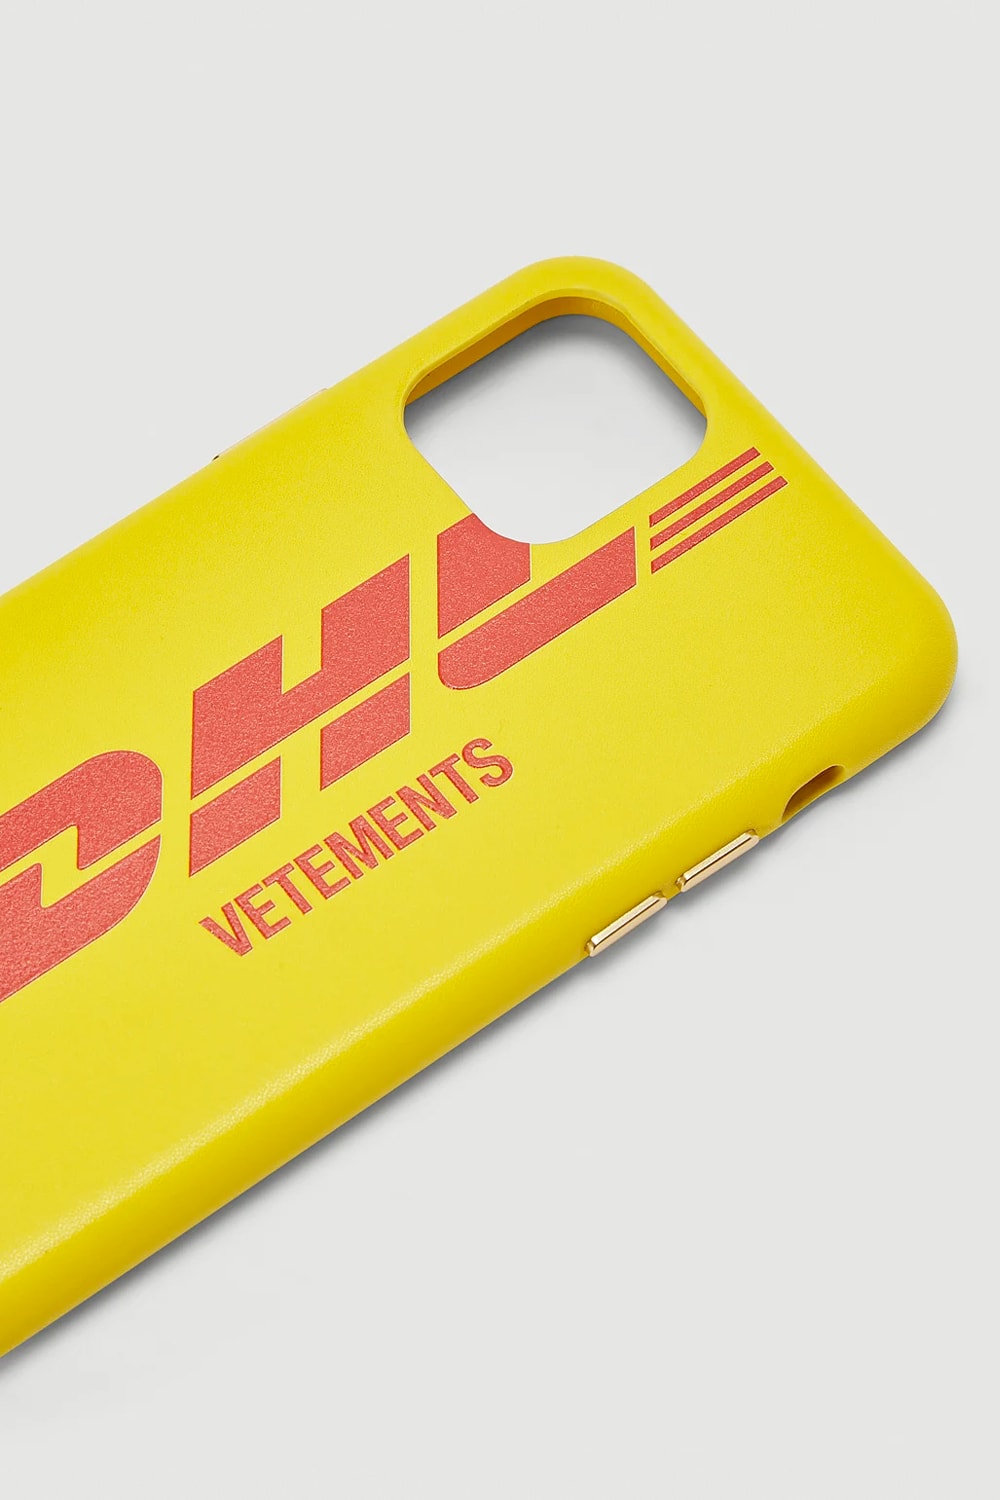 Vetements 再次推出品牌經典 DHL 聯乘設計手機殼